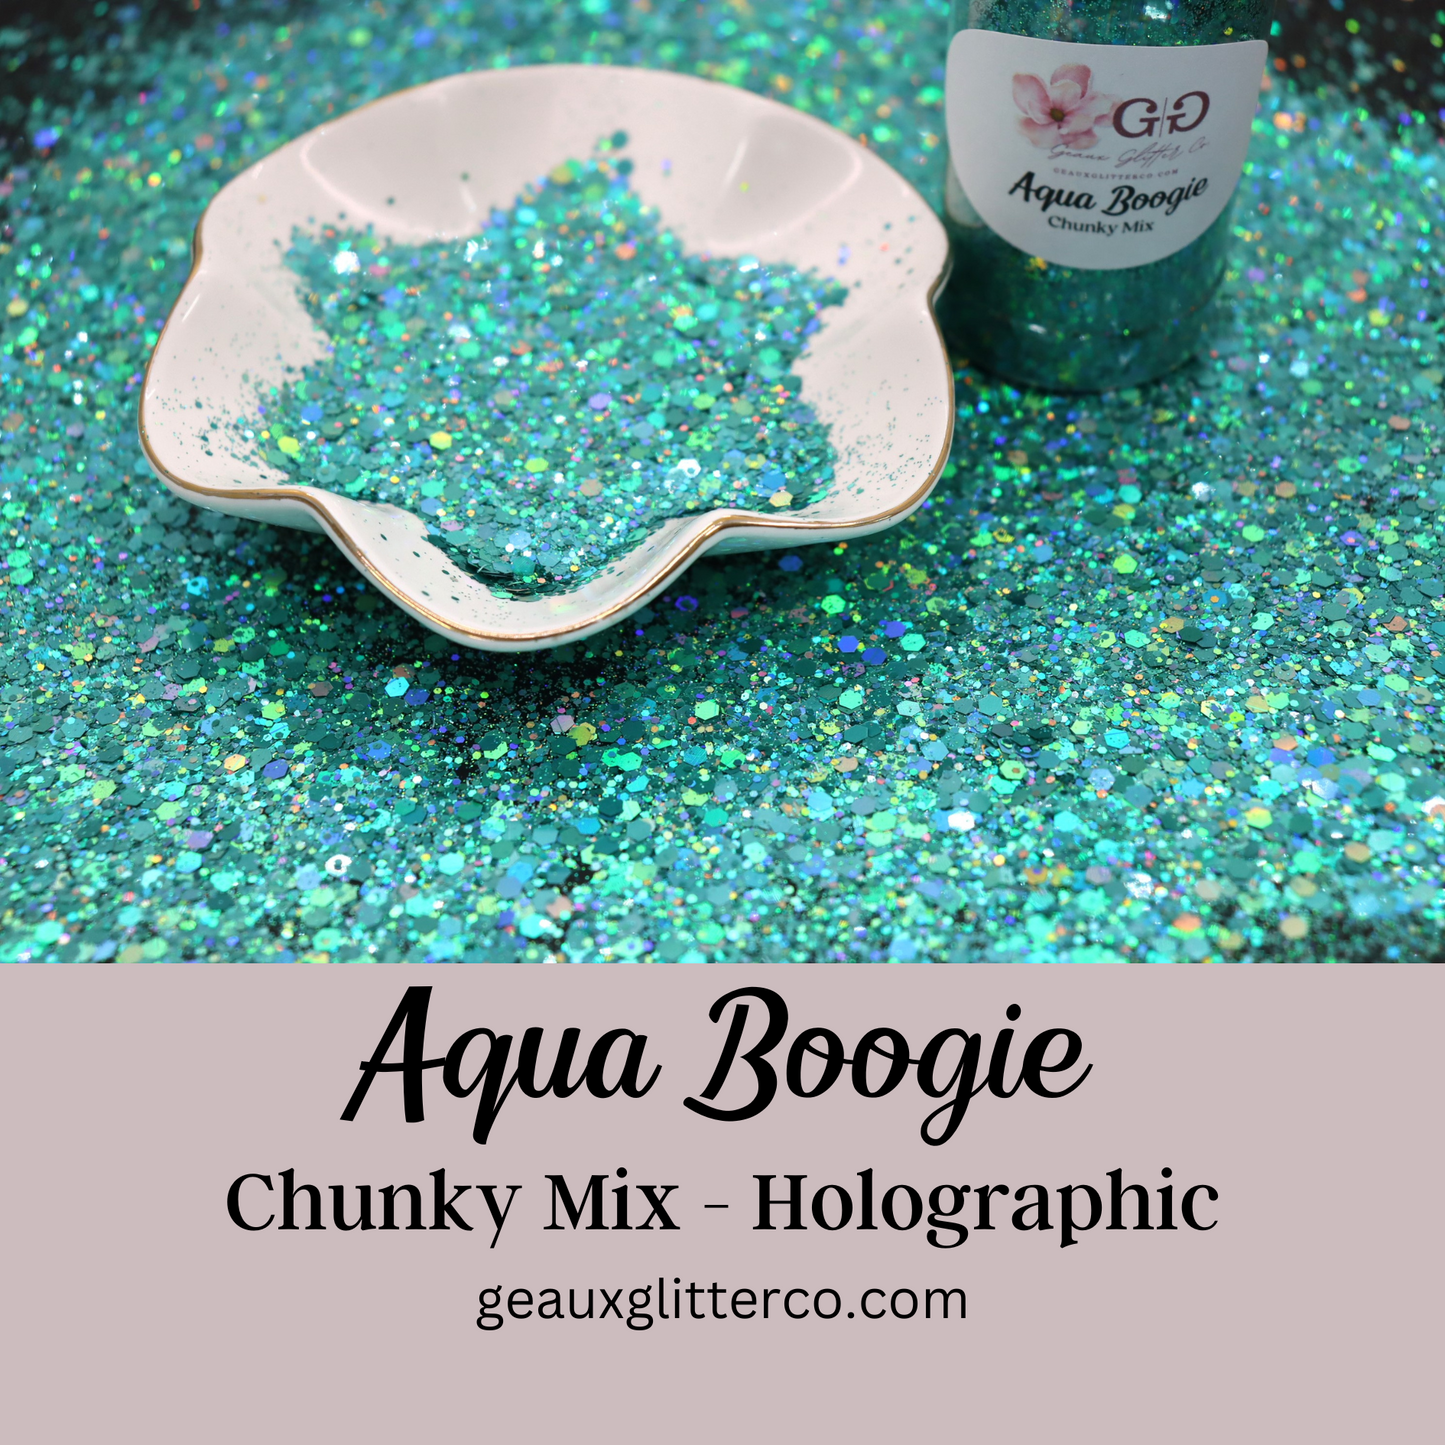 Aqua Boogie Chunky Mix - Holographic